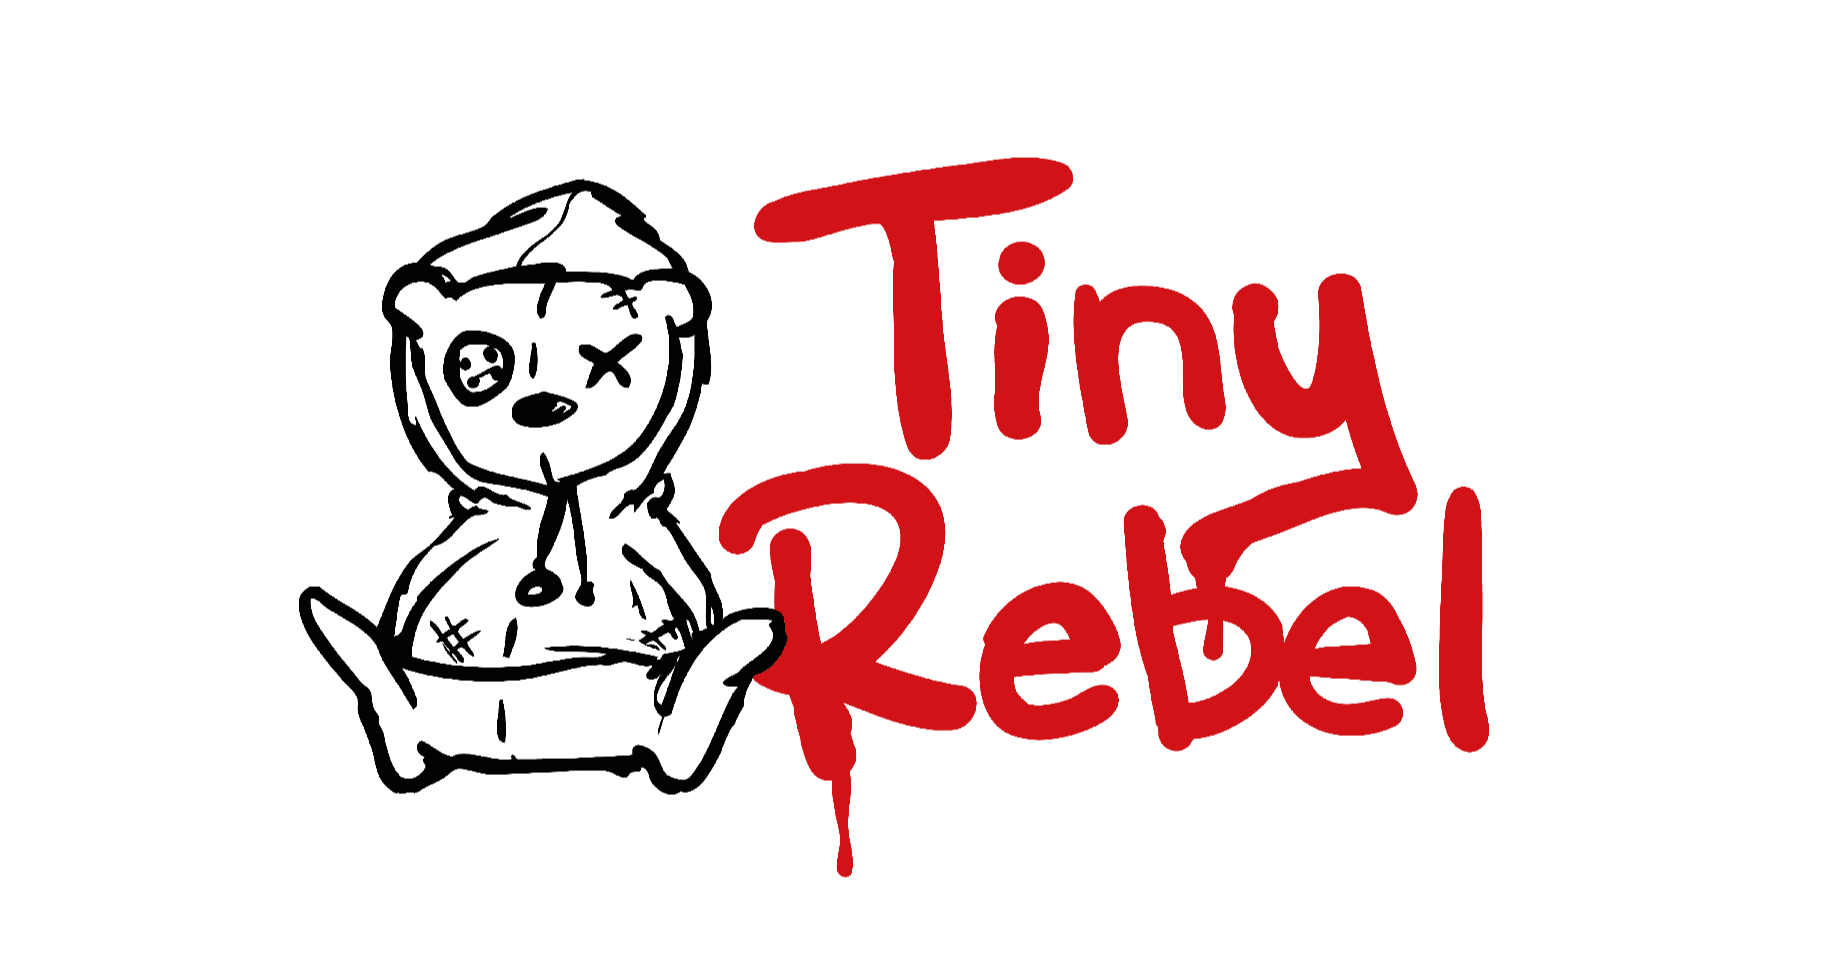 Tiney Rebel (landscape, resized).png